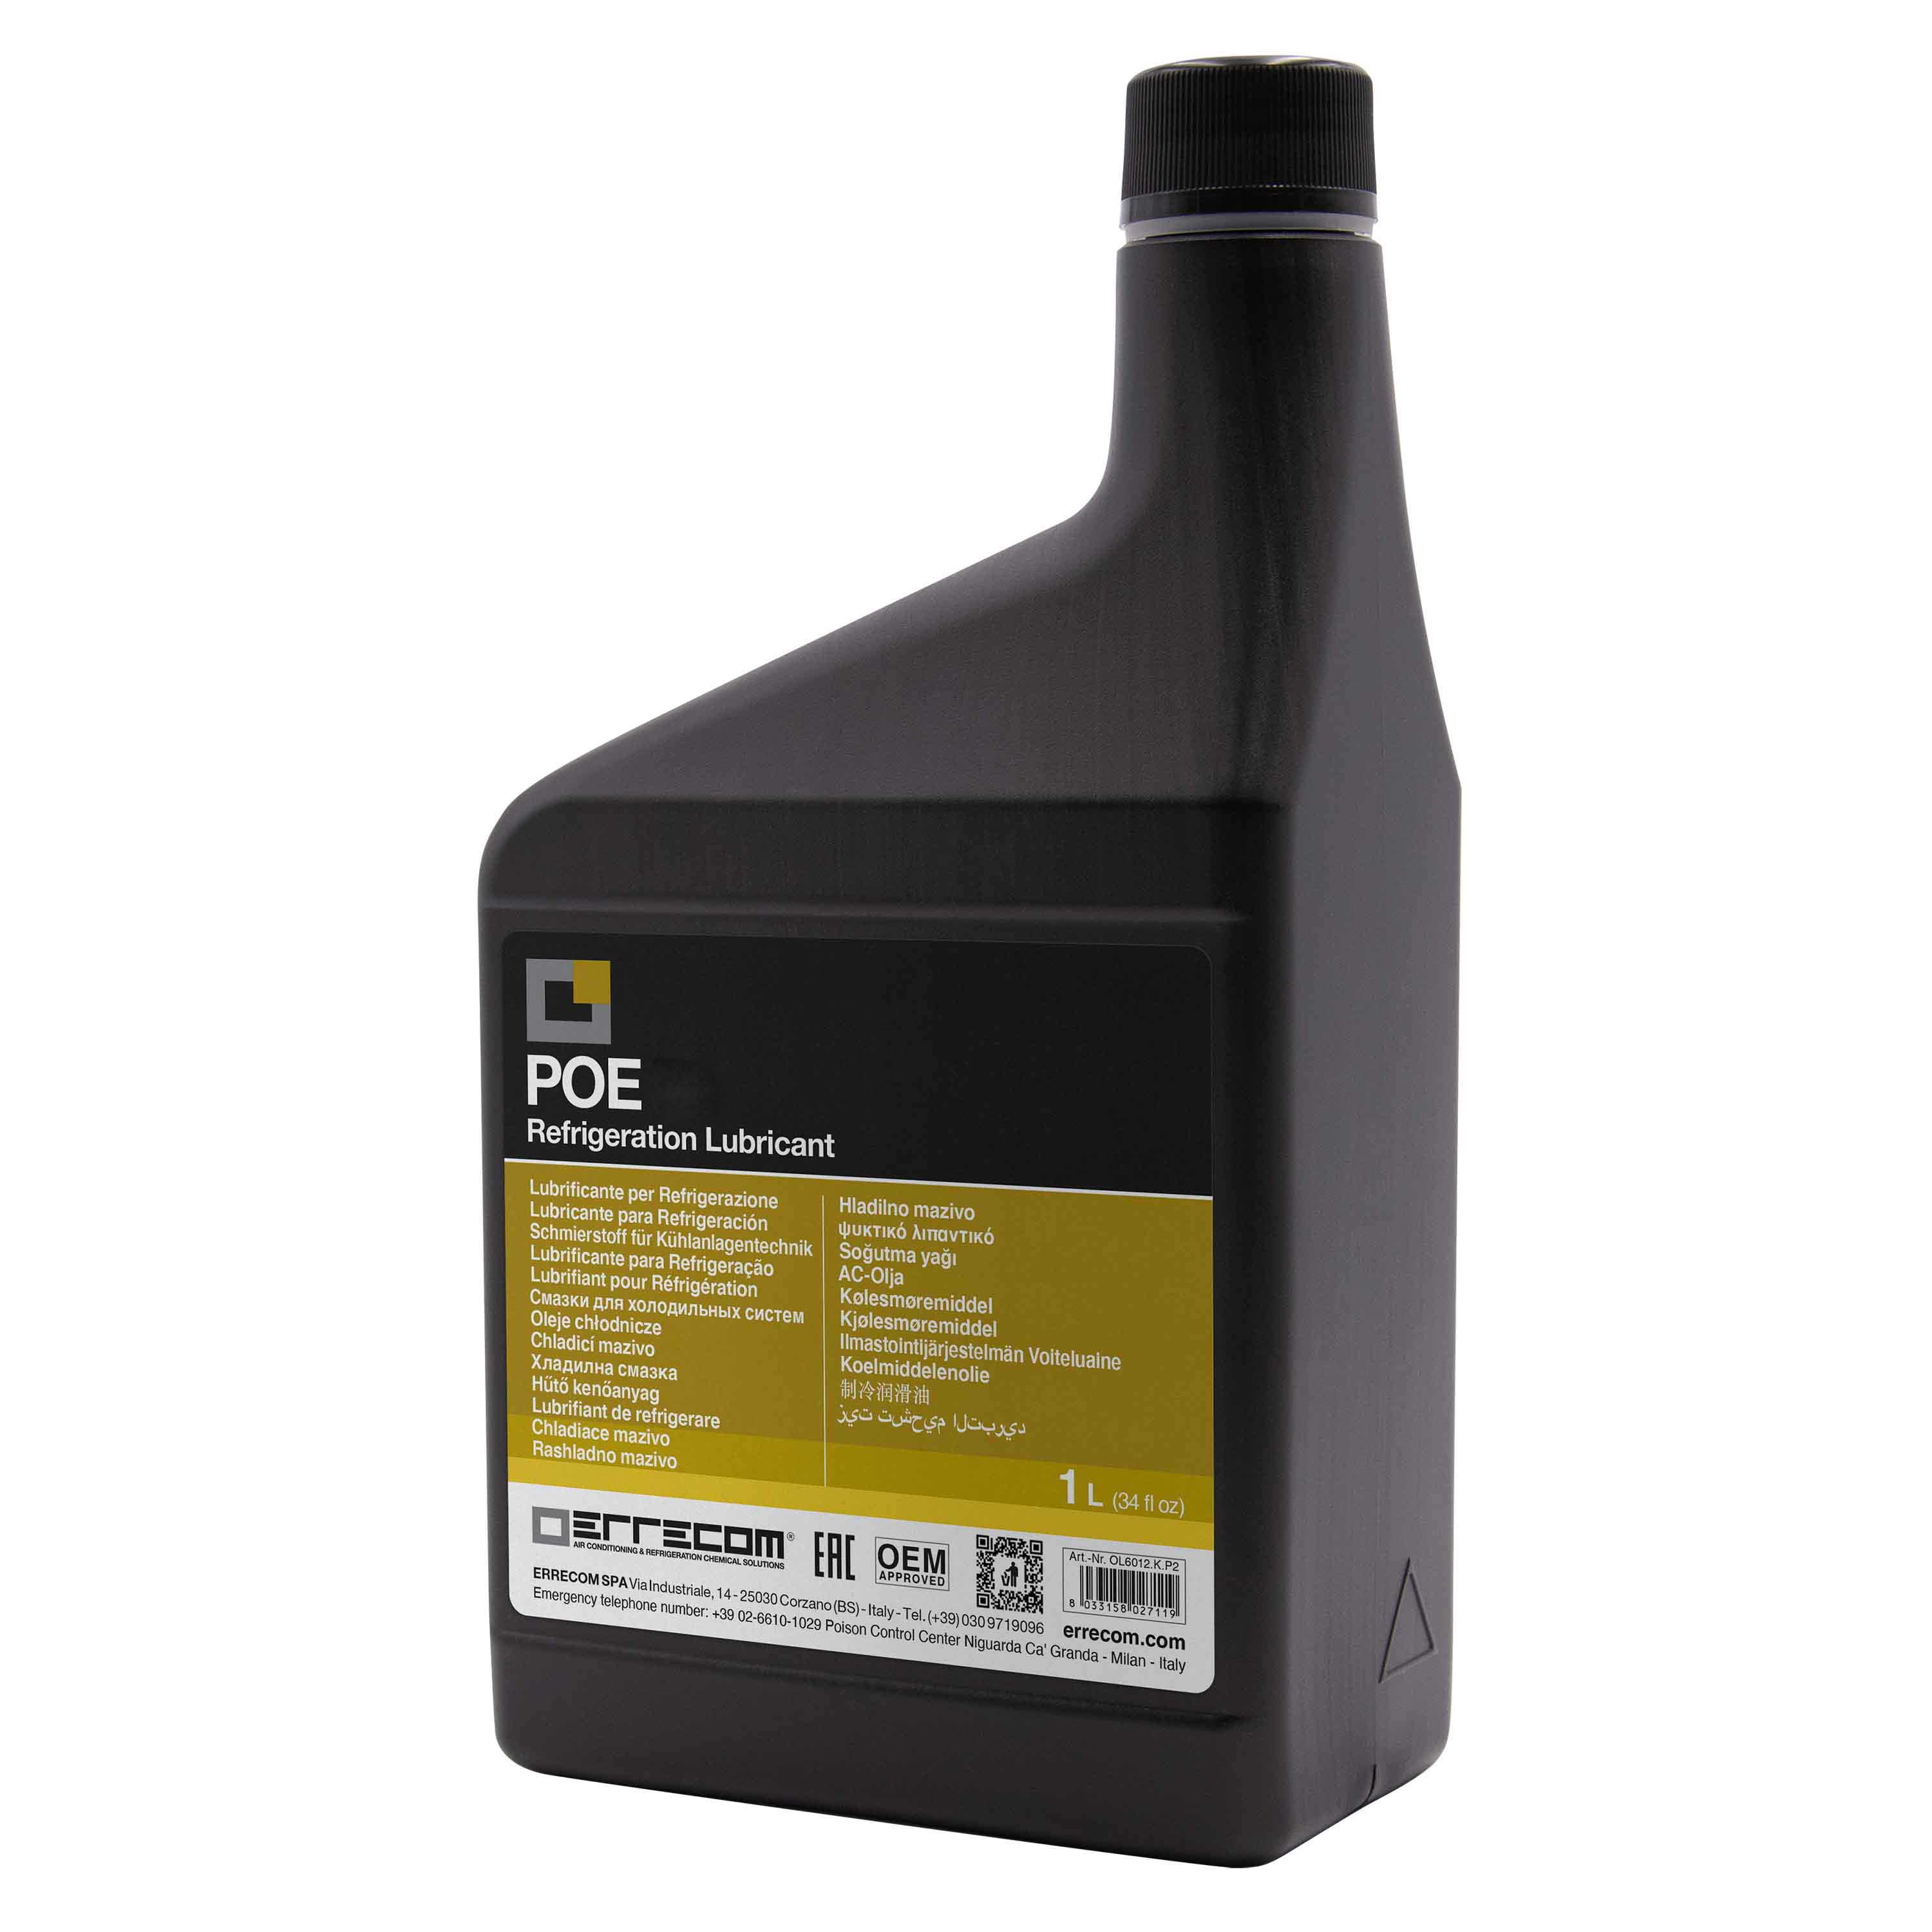 12 x R&AC Polyol Ester (POE) lubricant oil Errecom 100 - Plastic Tank 1 lt. - Package # 12 pcs. (total 12 liters)